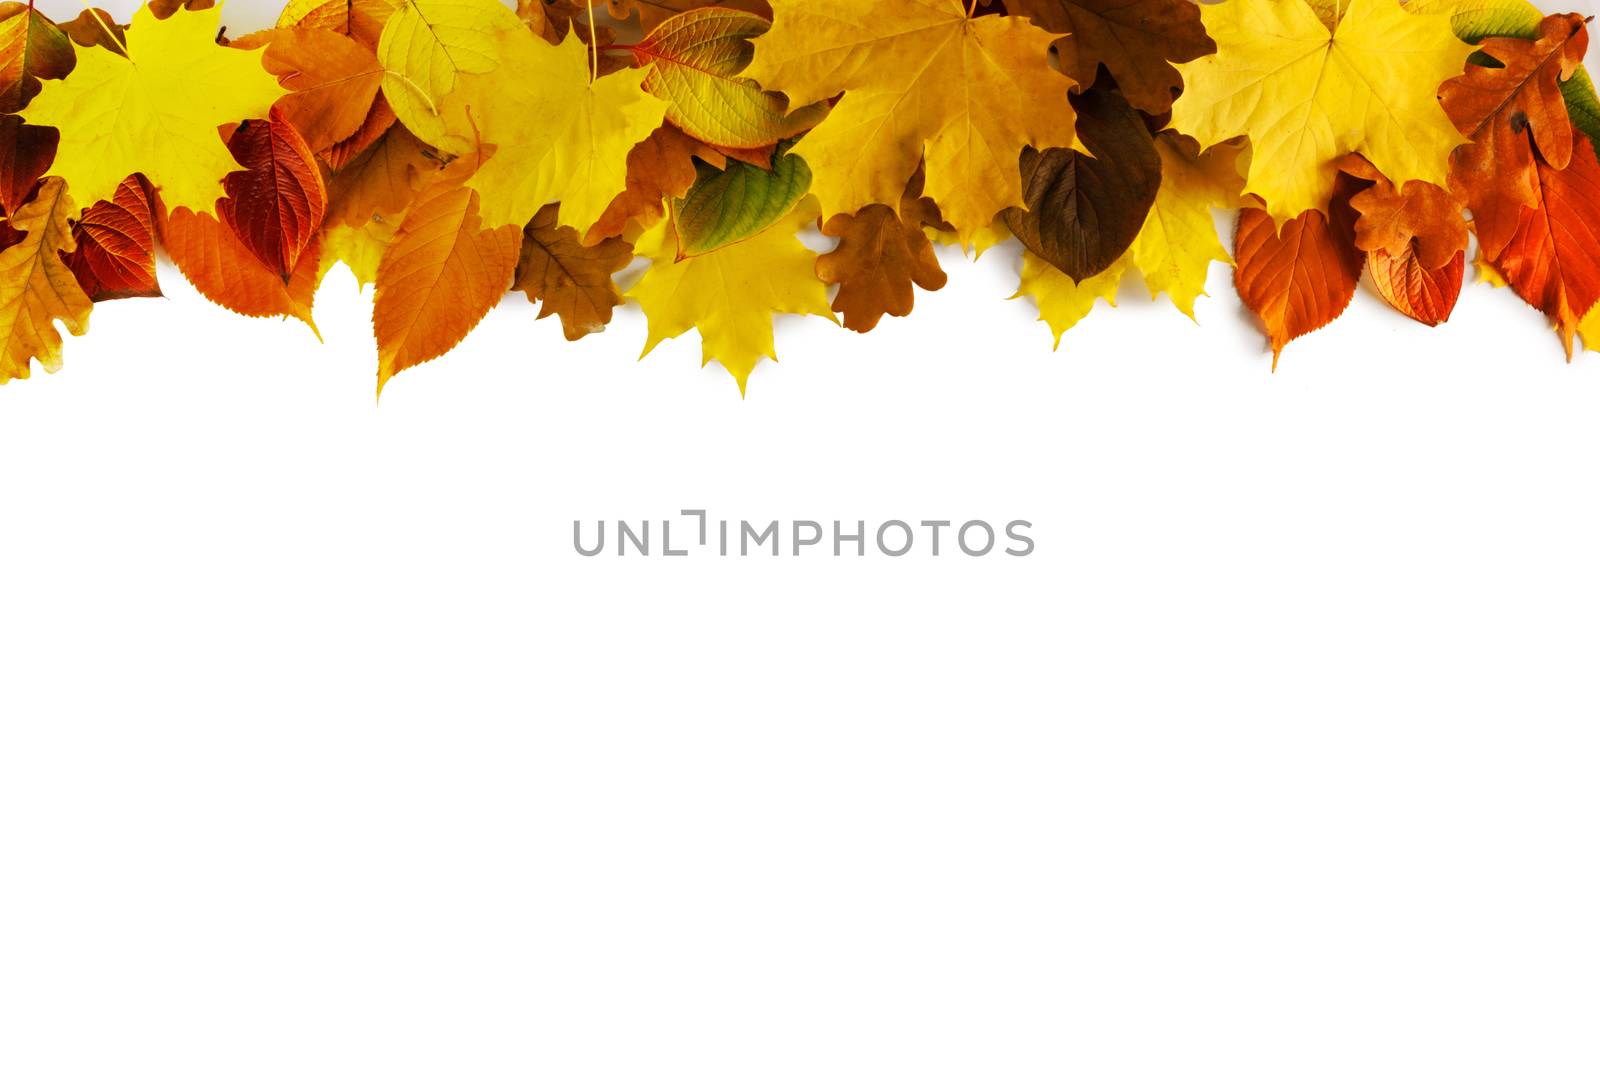 Autumn leaves border frame isolated on white background